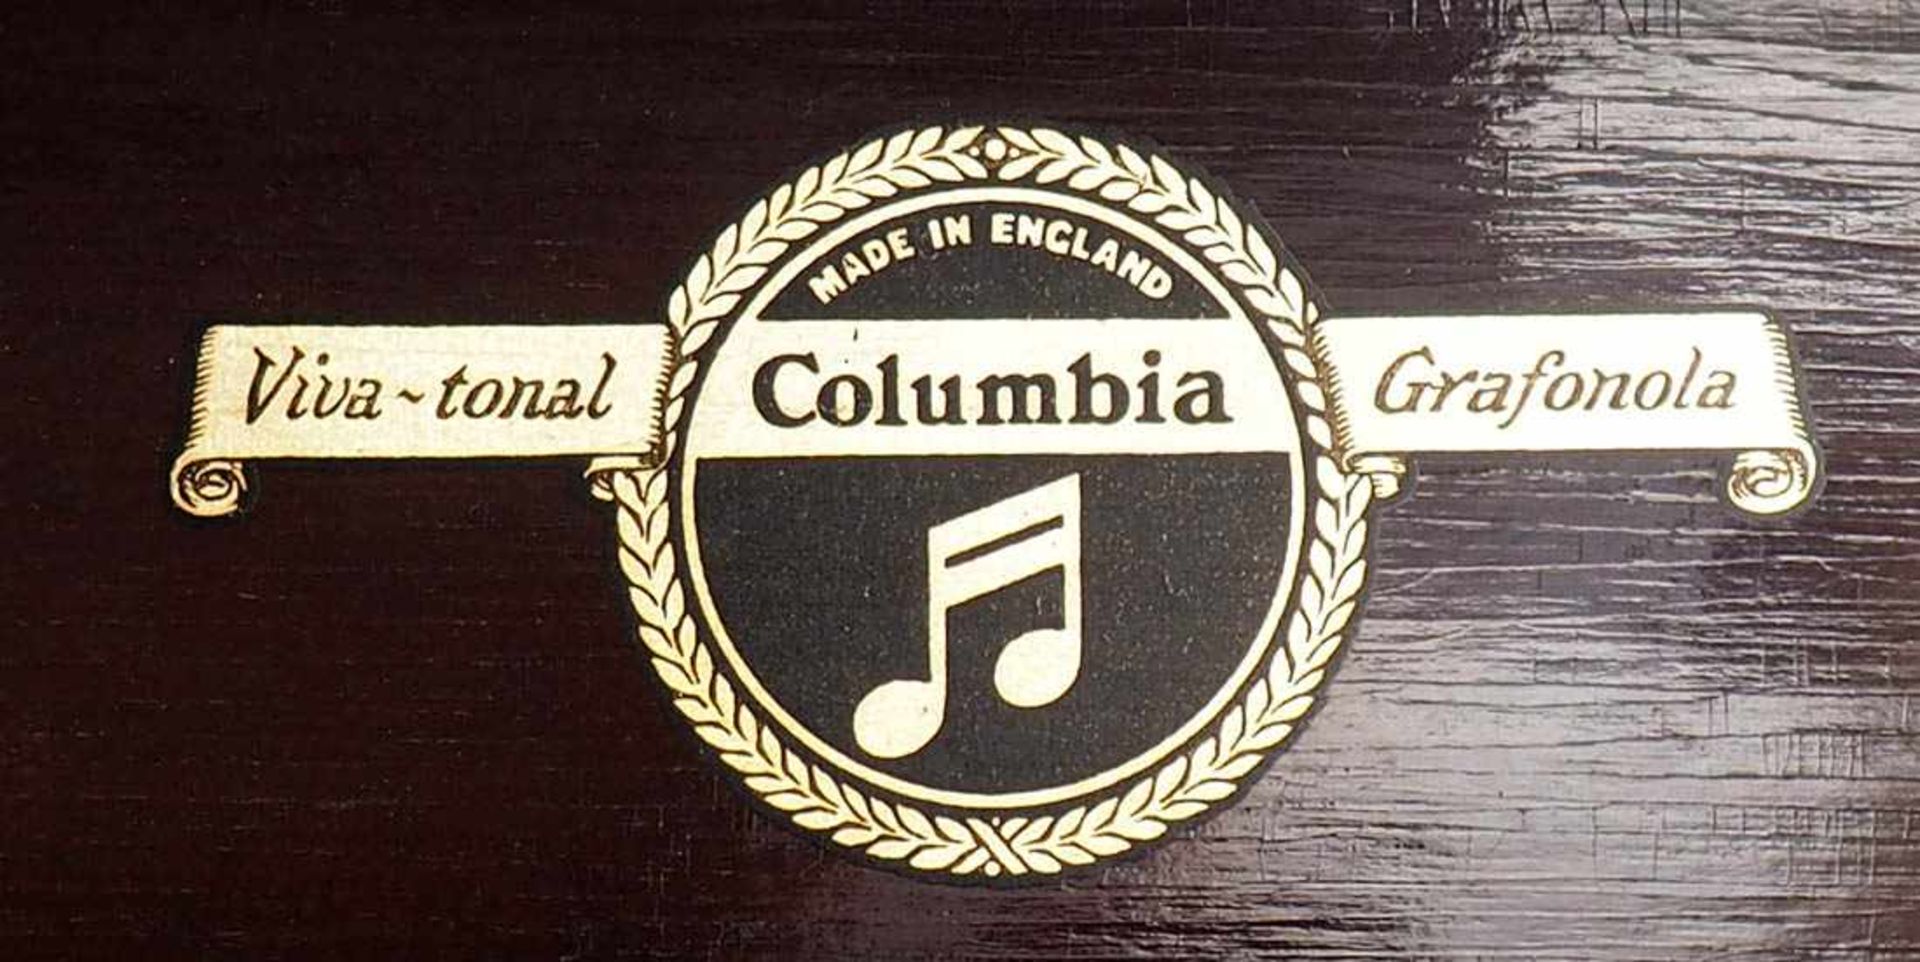 Grammophon, England, 30er Jahre Modell Columbia Viva Tonal Grafonola. Intakt. Dazu zahlreiche - Bild 6 aus 8